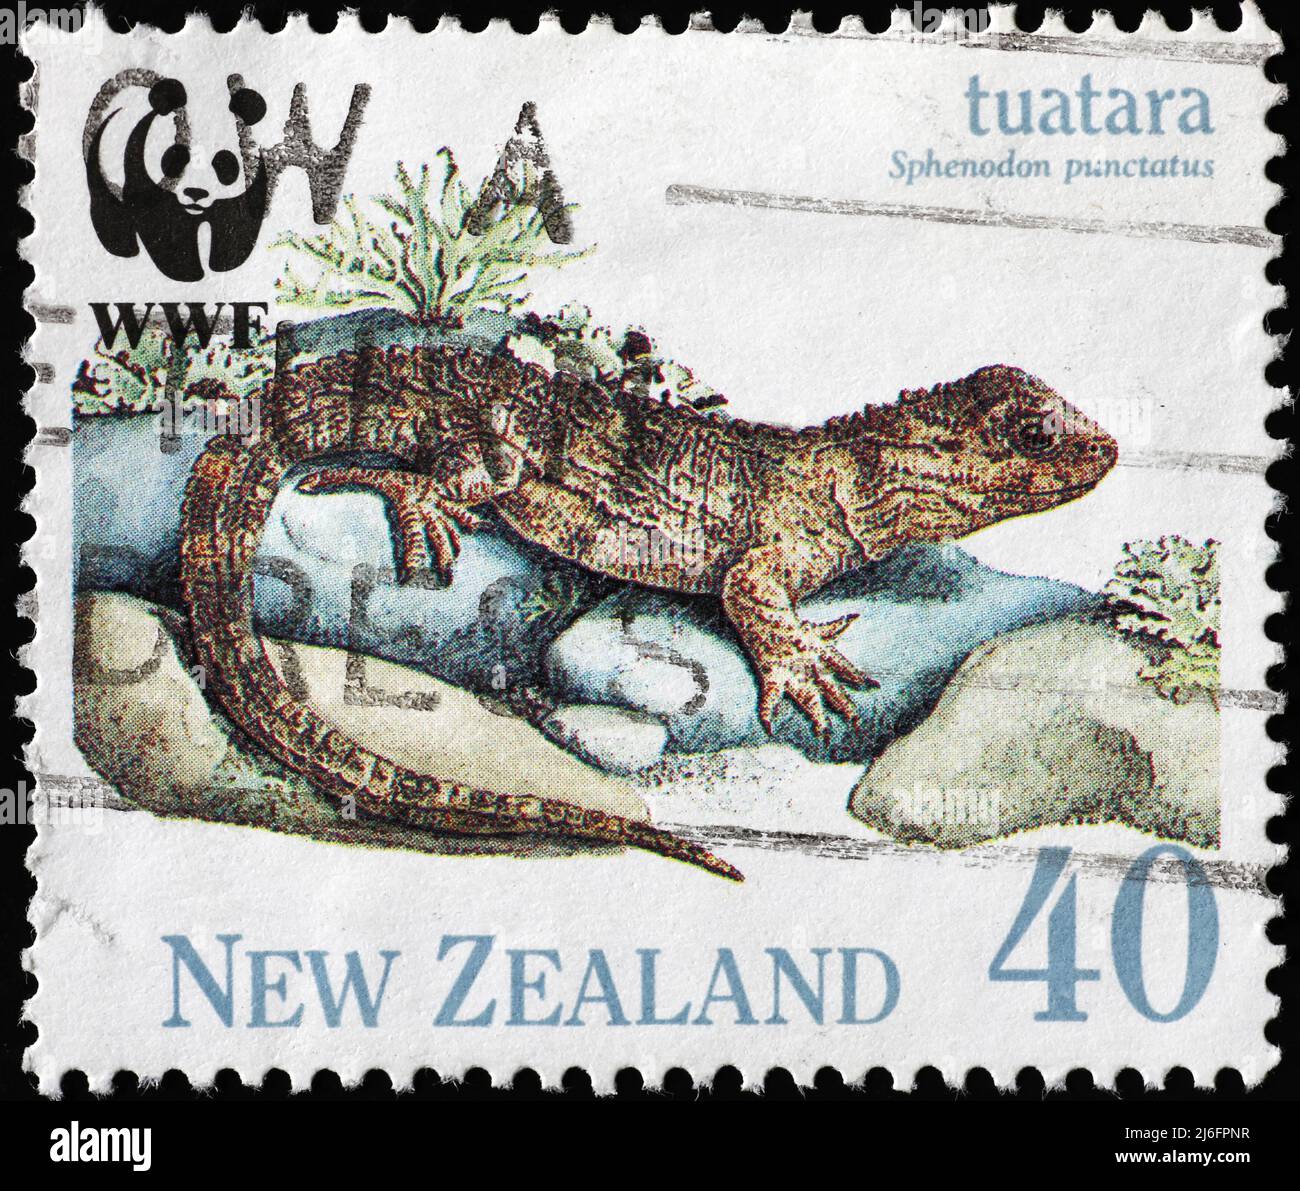 Rare lizard Tuatara on New Zealand postage stamp Stock Photo